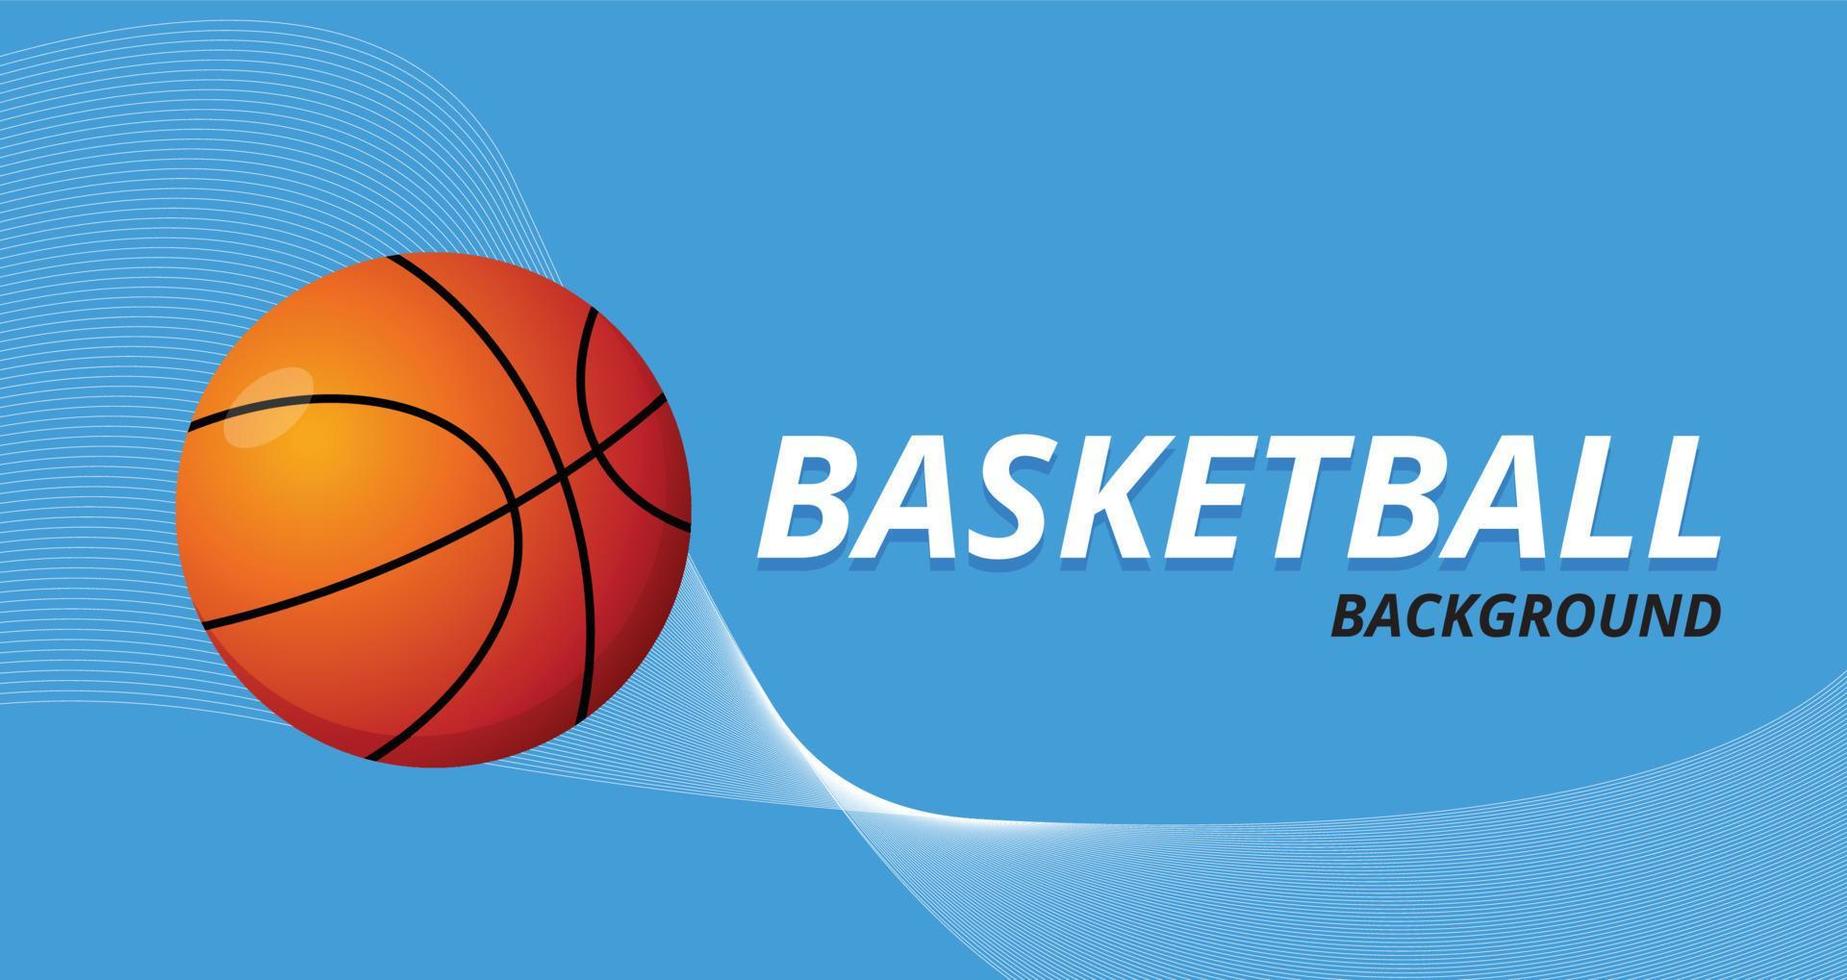 Basketball on background vector